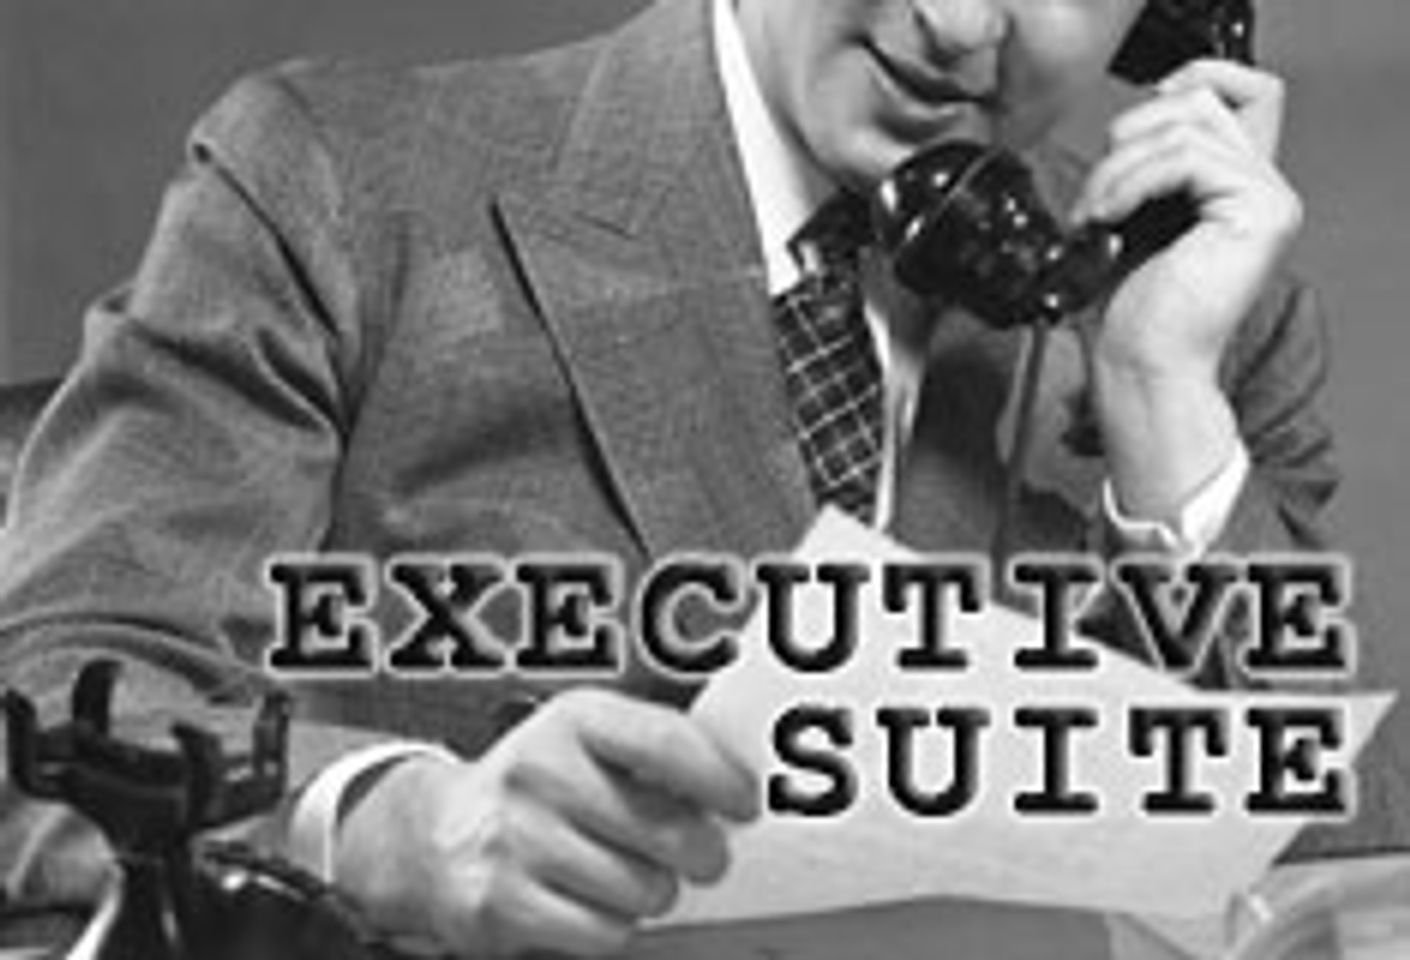 Executive Suite: Chuck Tsiamis, Video Secrets